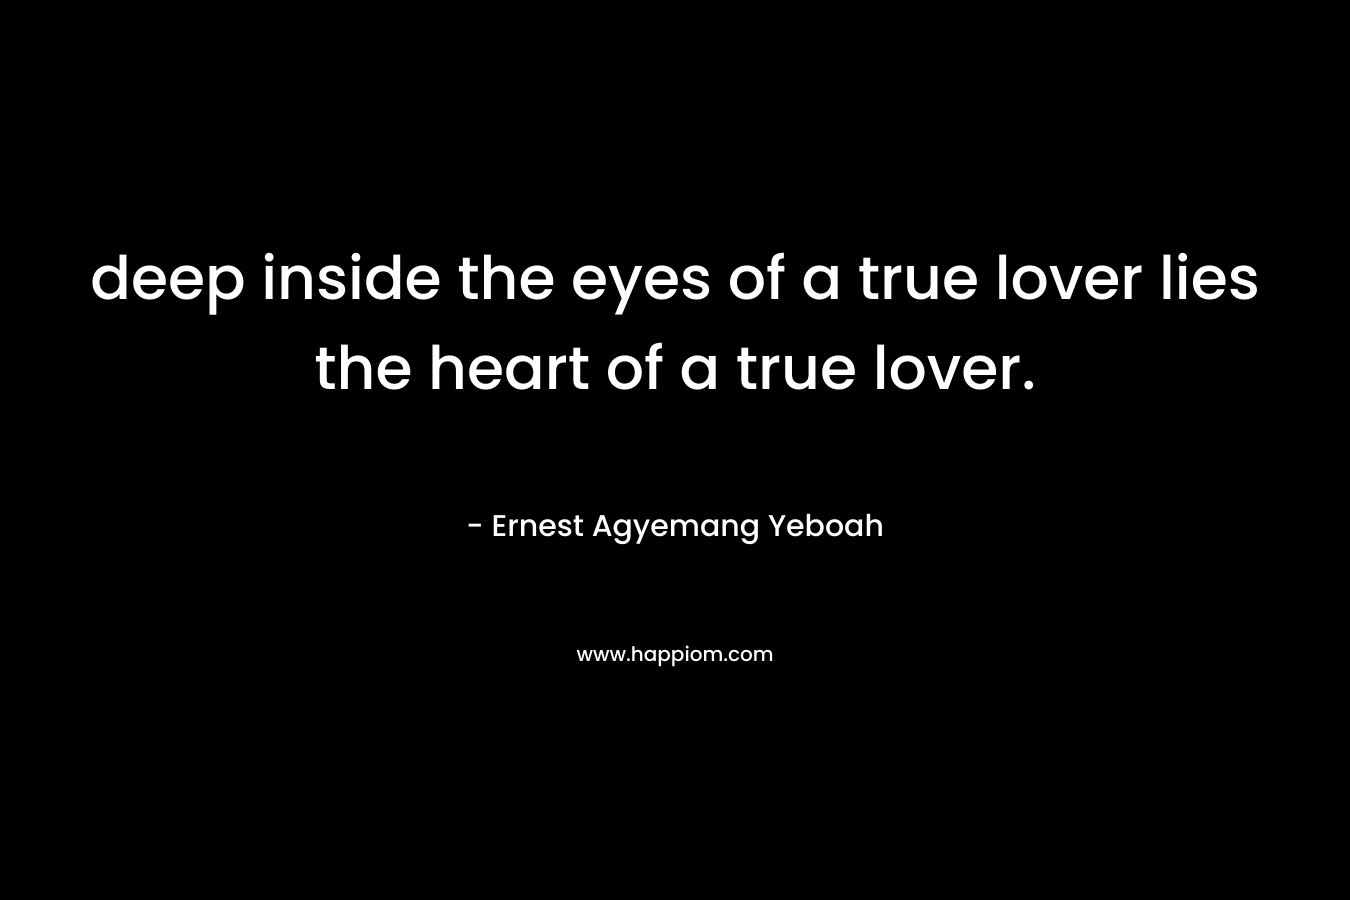 deep inside the eyes of a true lover lies the heart of a true lover.